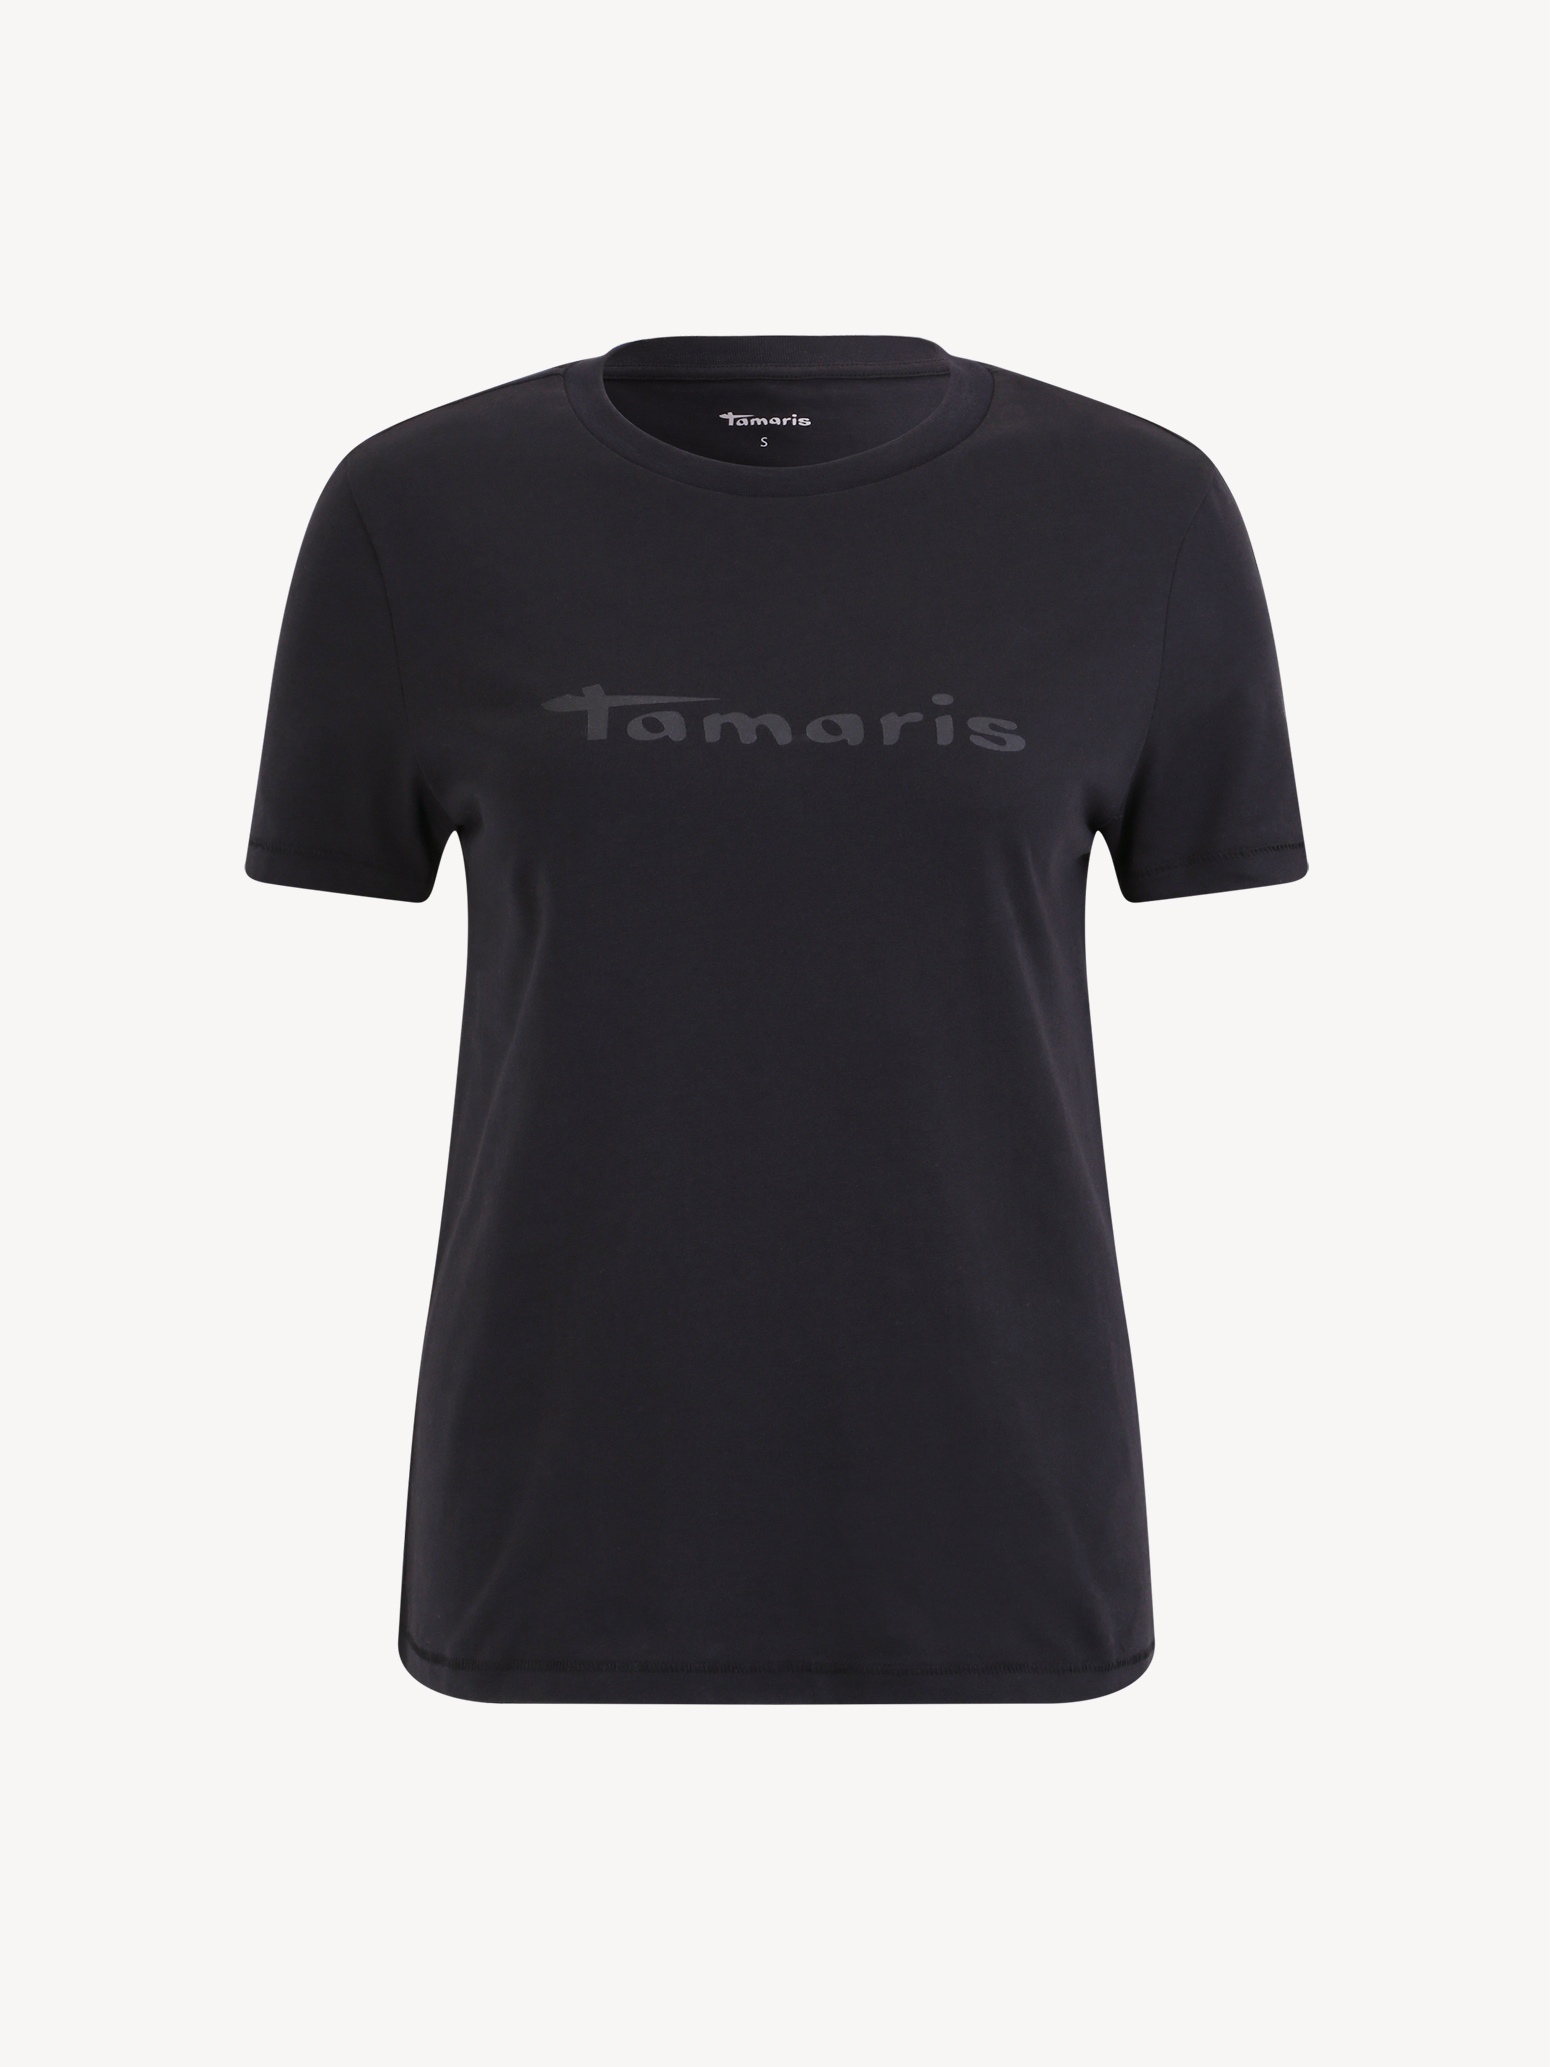 kaufen! T-Shirt schwarz - TAW0121-80009: online Tamaris T-Shirts